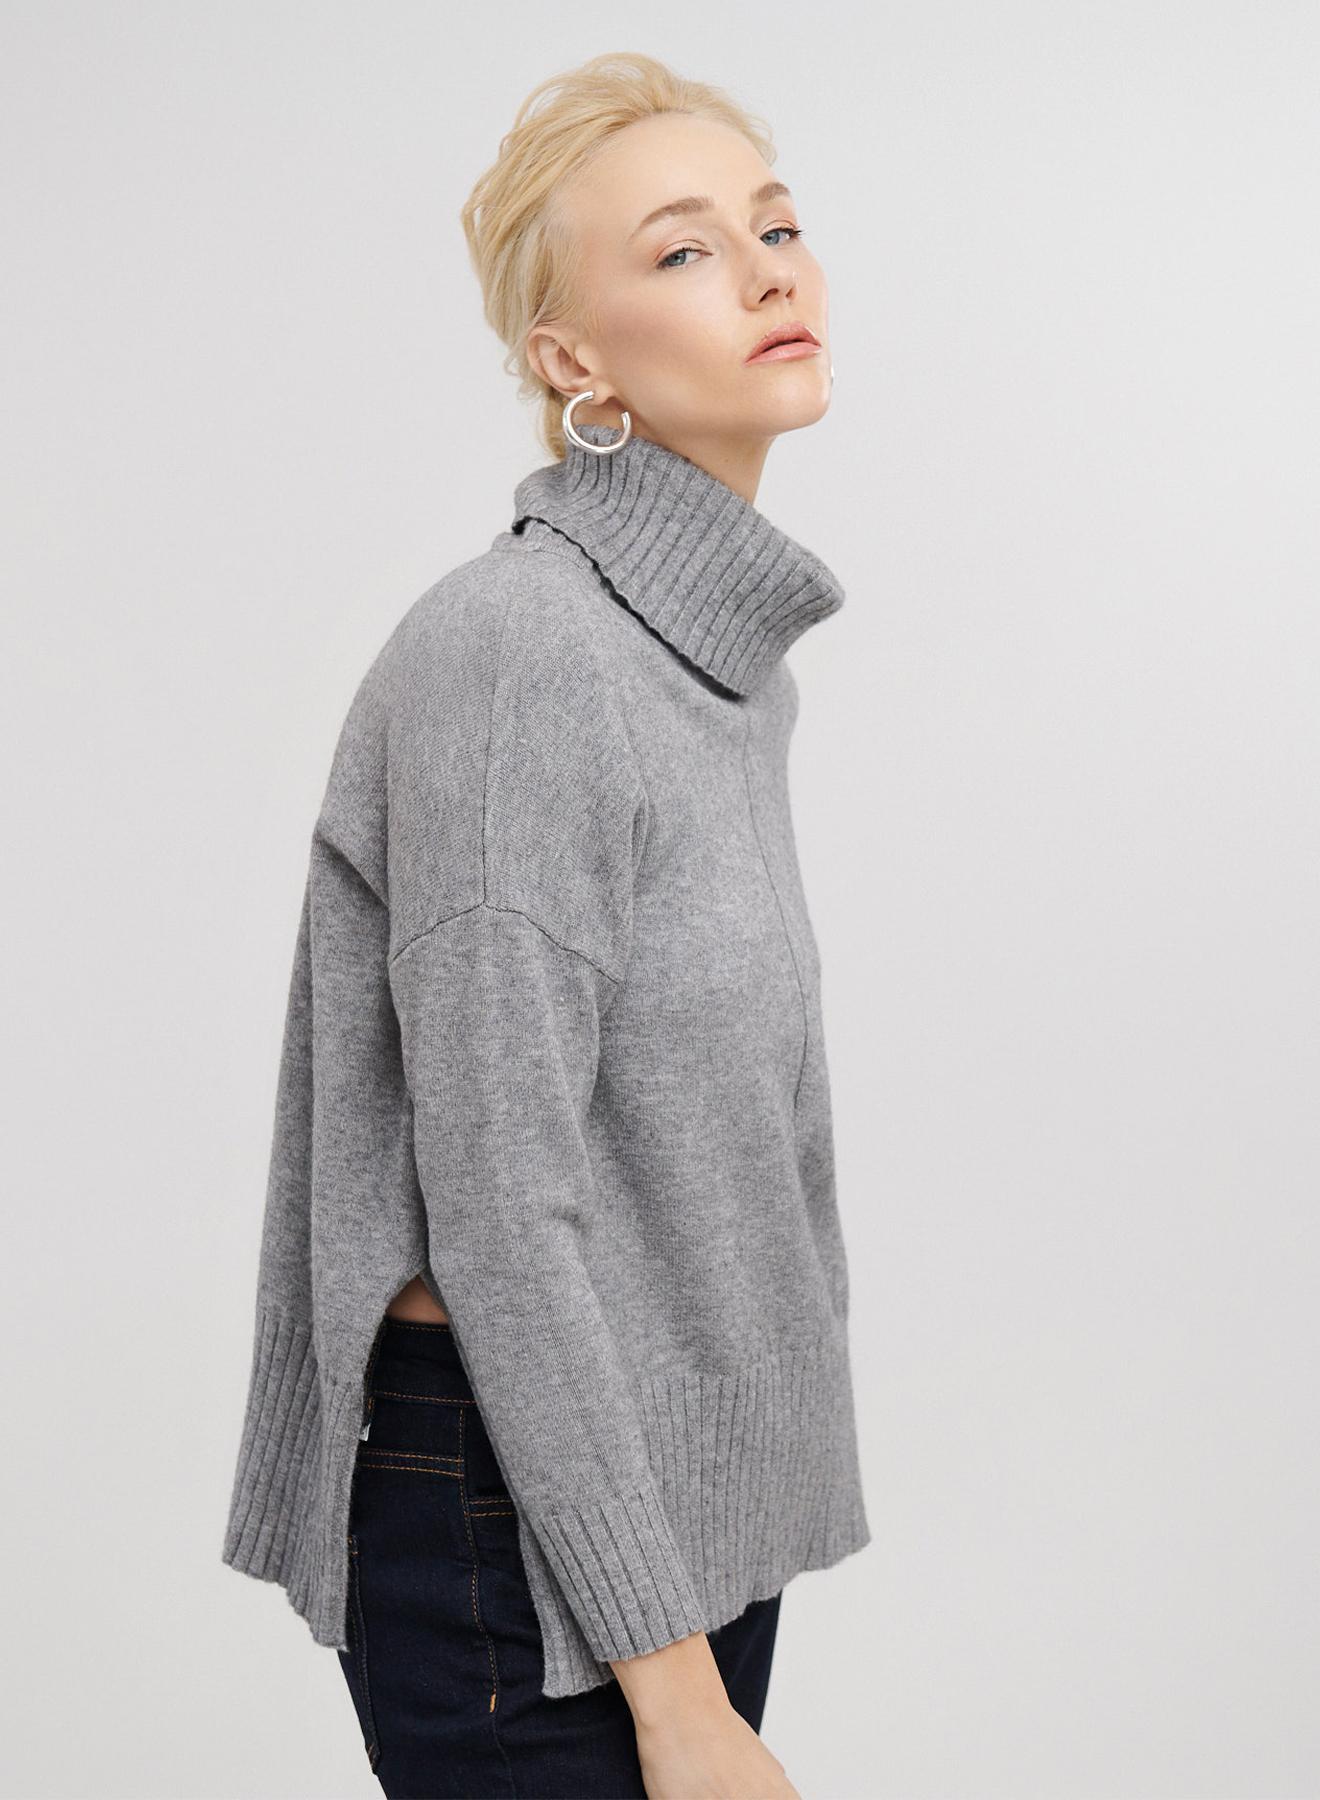 Turtleneck knit blouse with side slits - 2